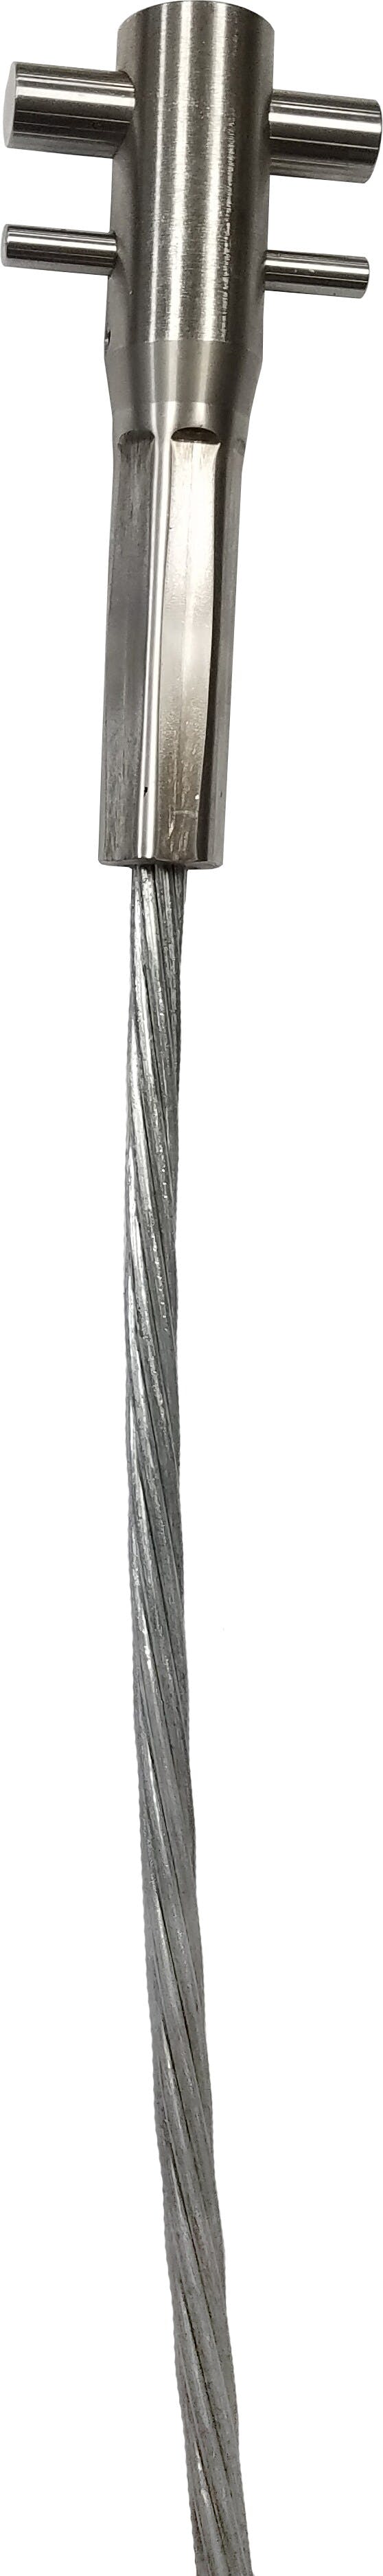 3M™ DBI-SALA® Lad-Saf™ Swaged Cable 6115007, 3/8 Inch, Galvanized Steel, 30 m